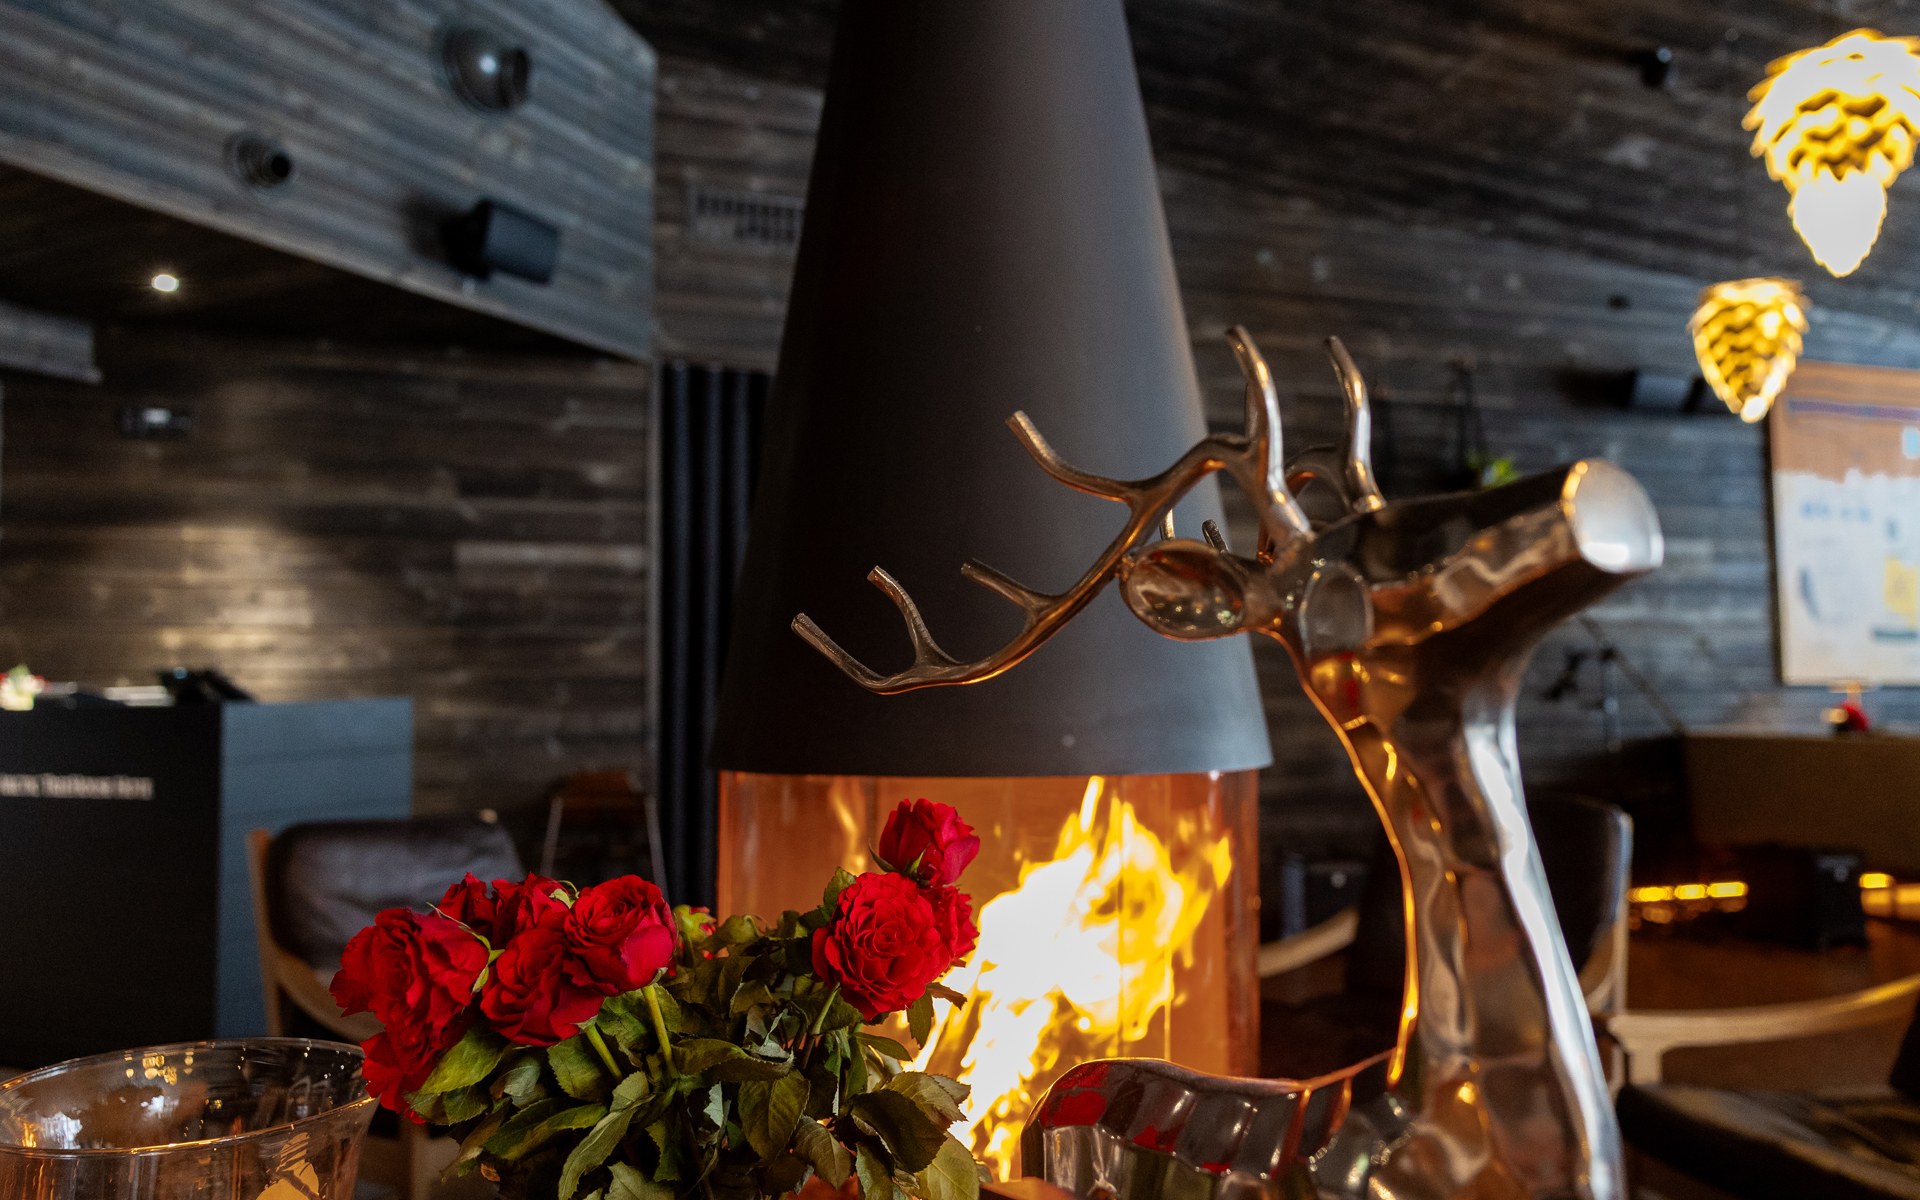 Roses and warm fireplace at the Rakas Restaurant, Rovaniemi.